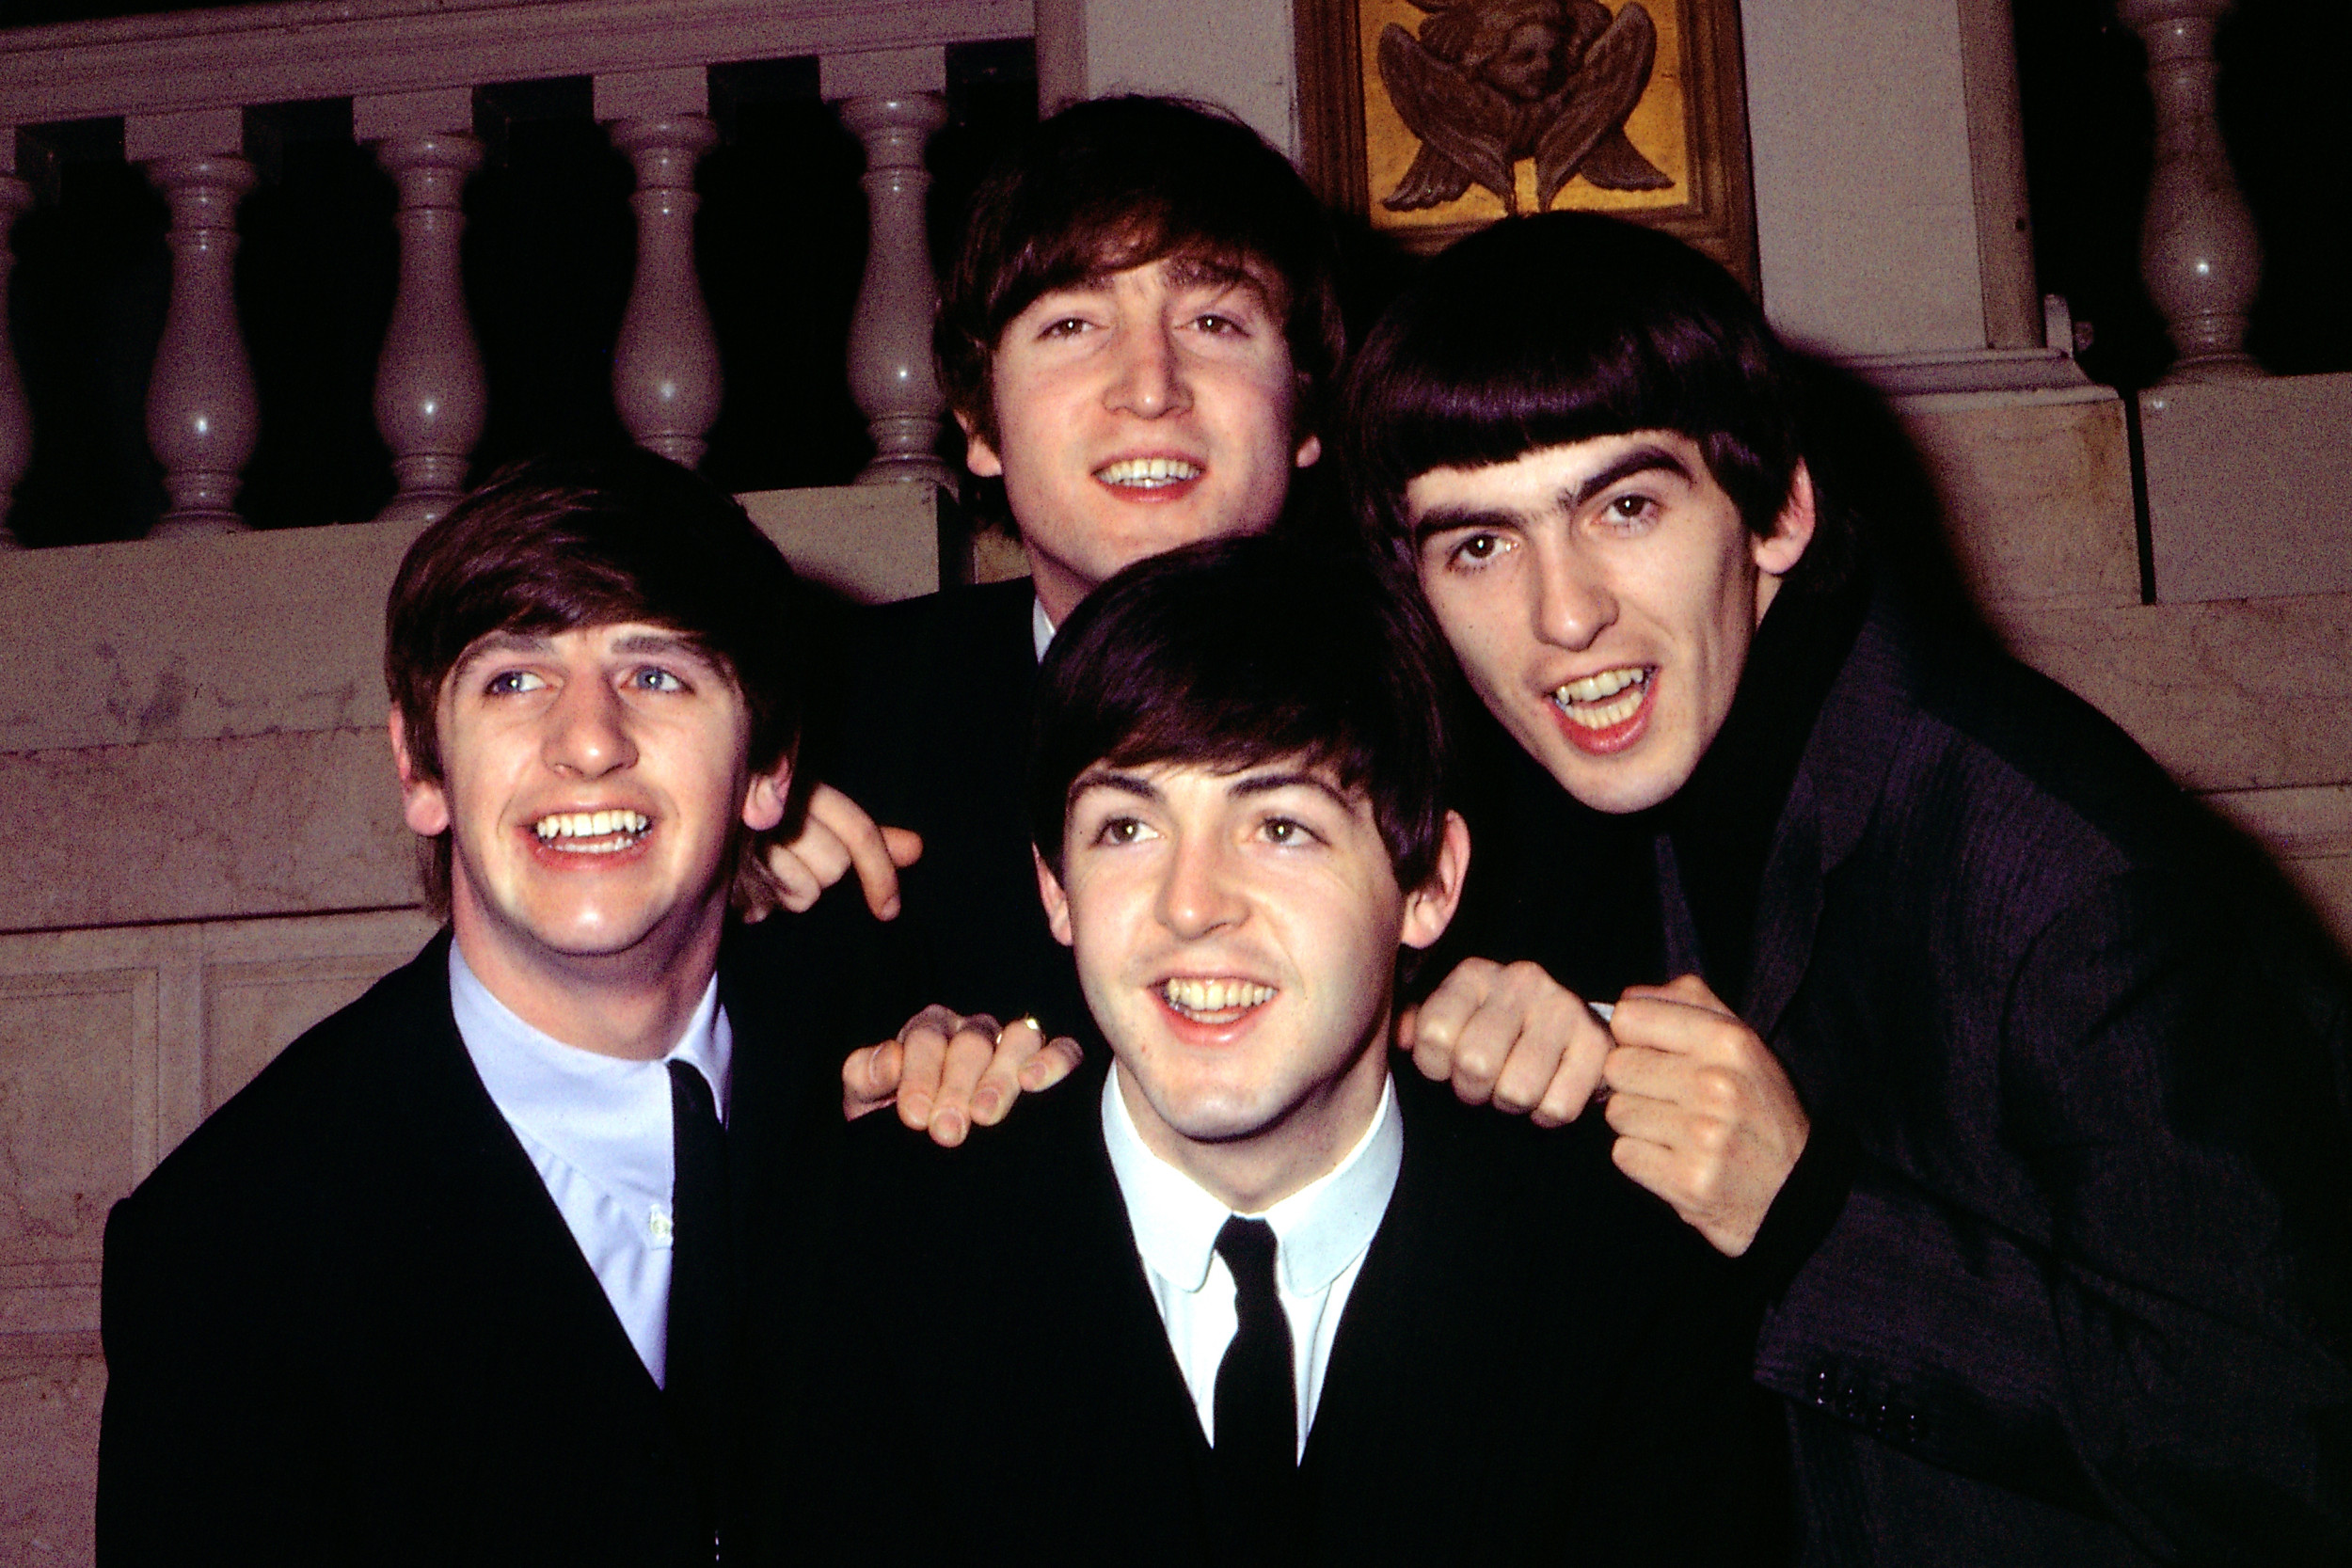 The Beatles or known as The Fab Four, John Lennon, Paul McCartney, George Harrison and Ringo Starr